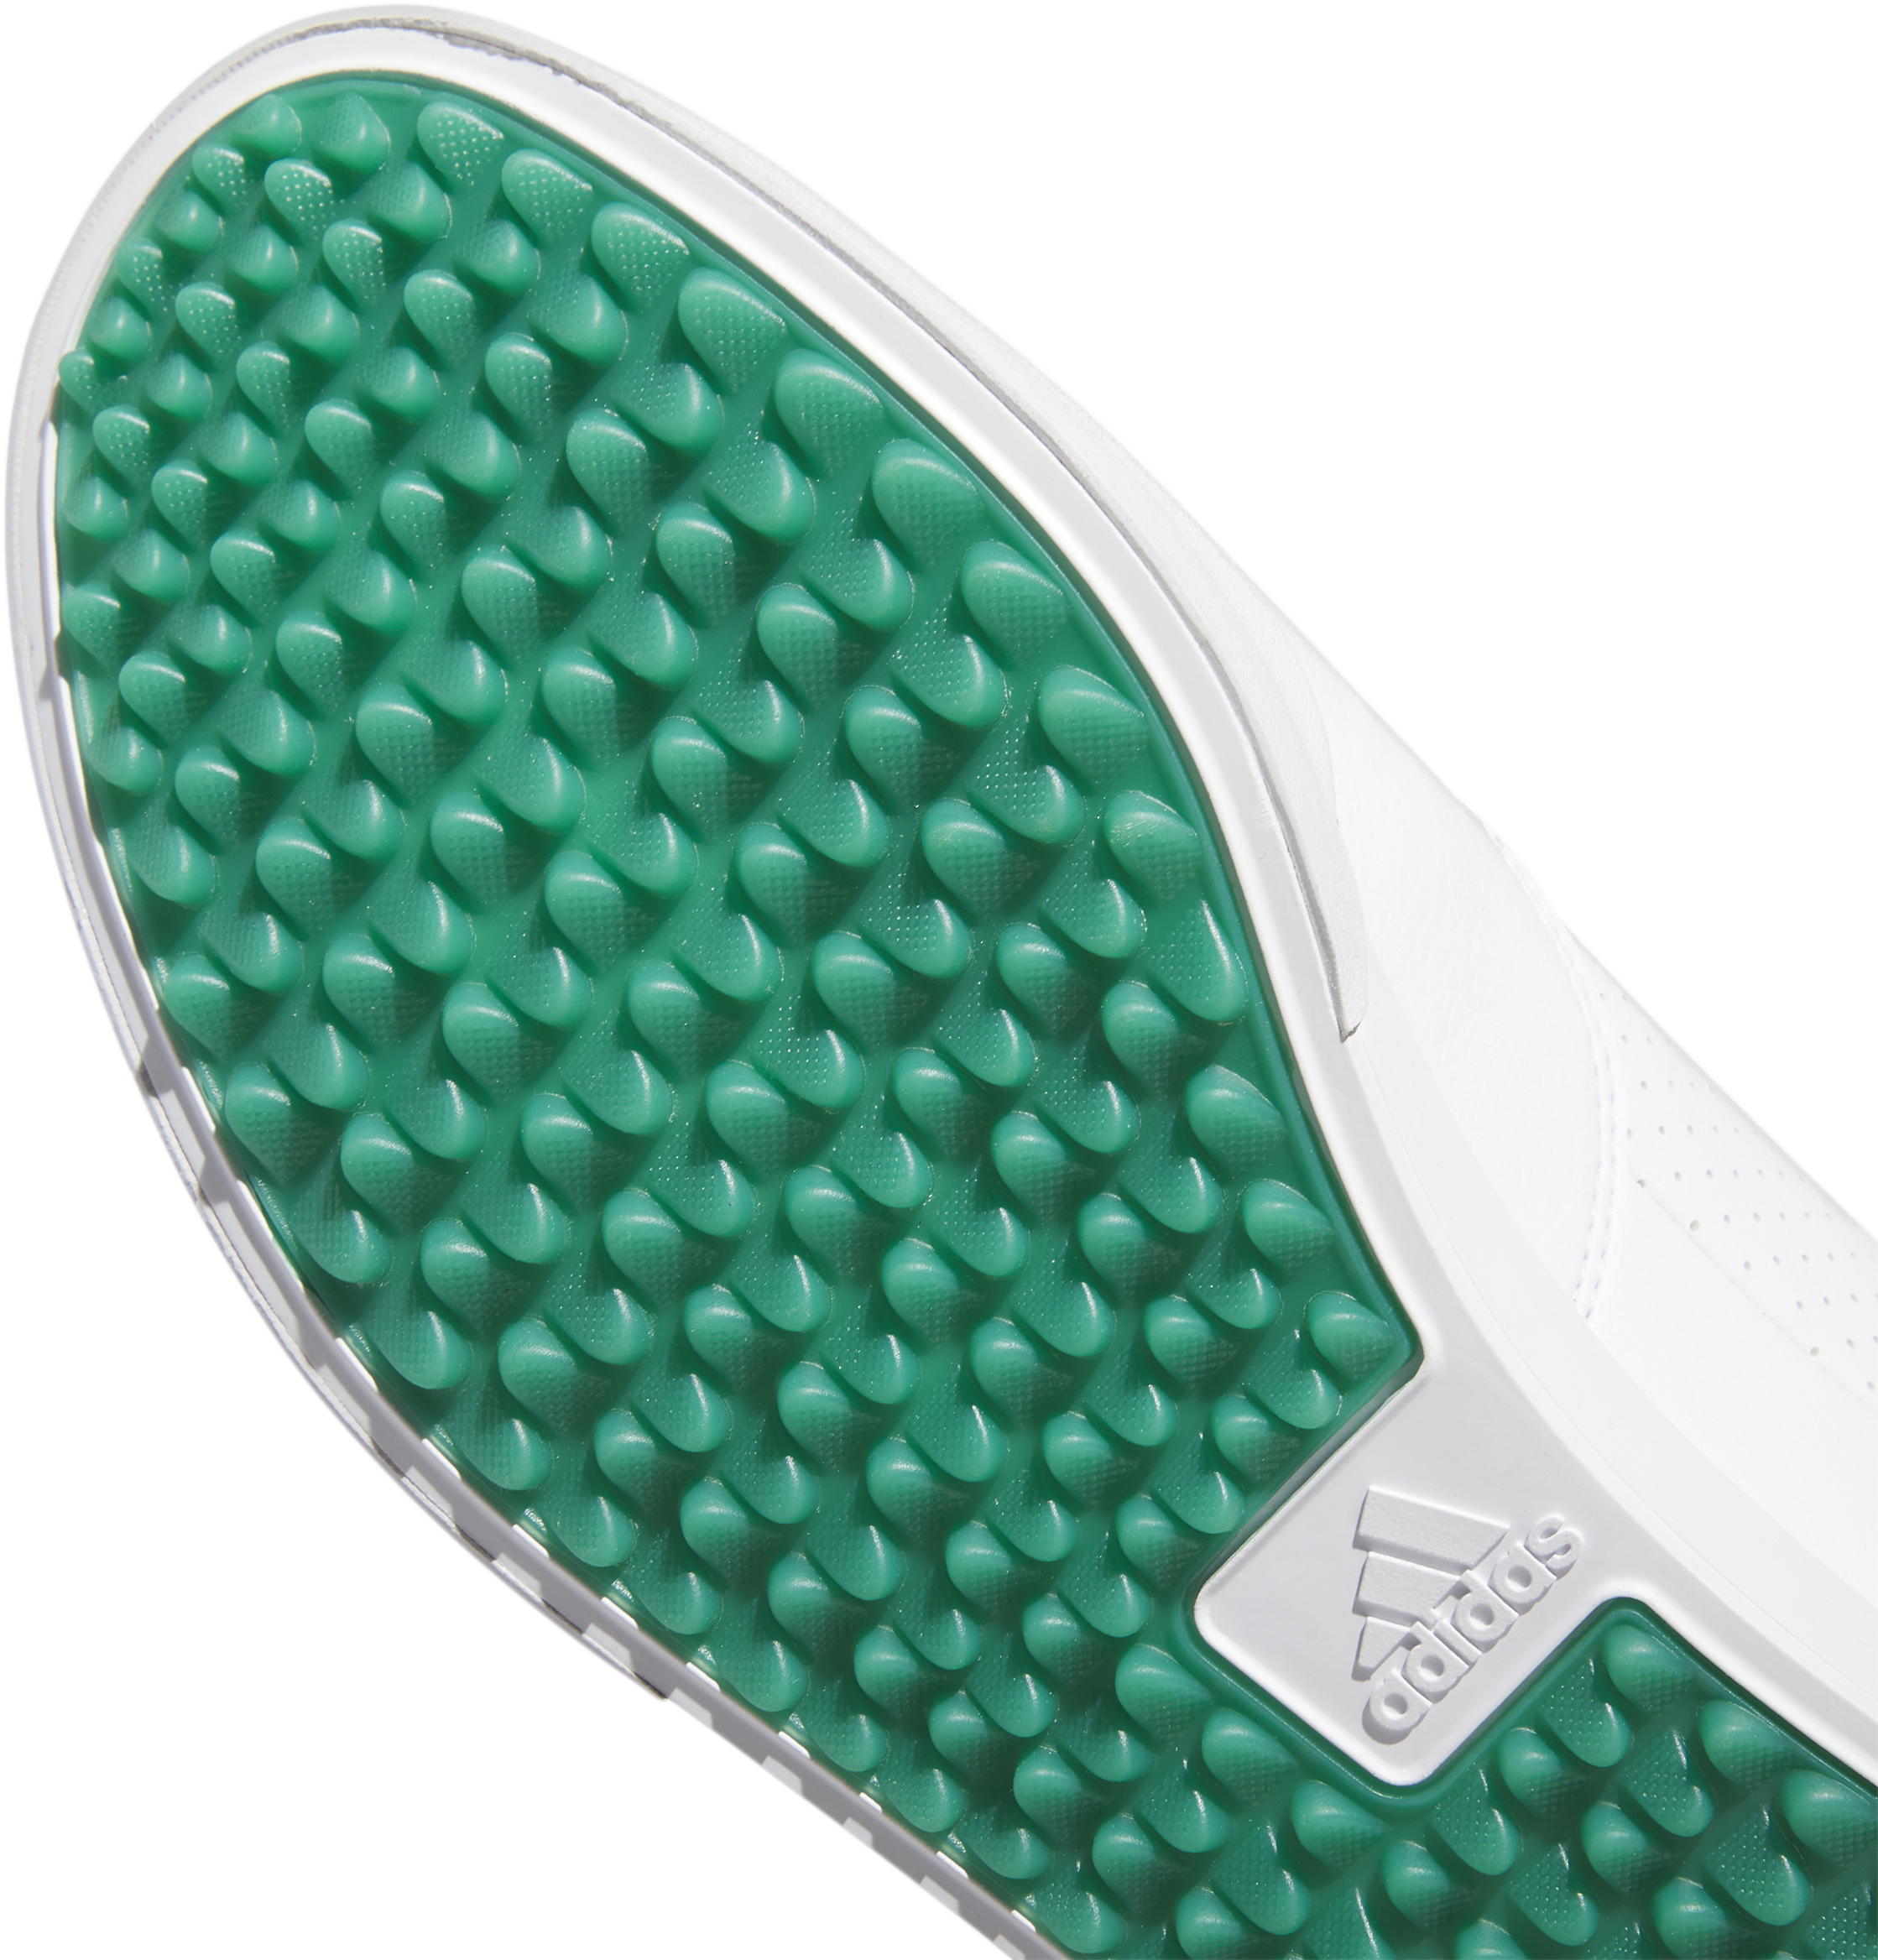 adidas Retrocross Golfschuh, white/green/coral